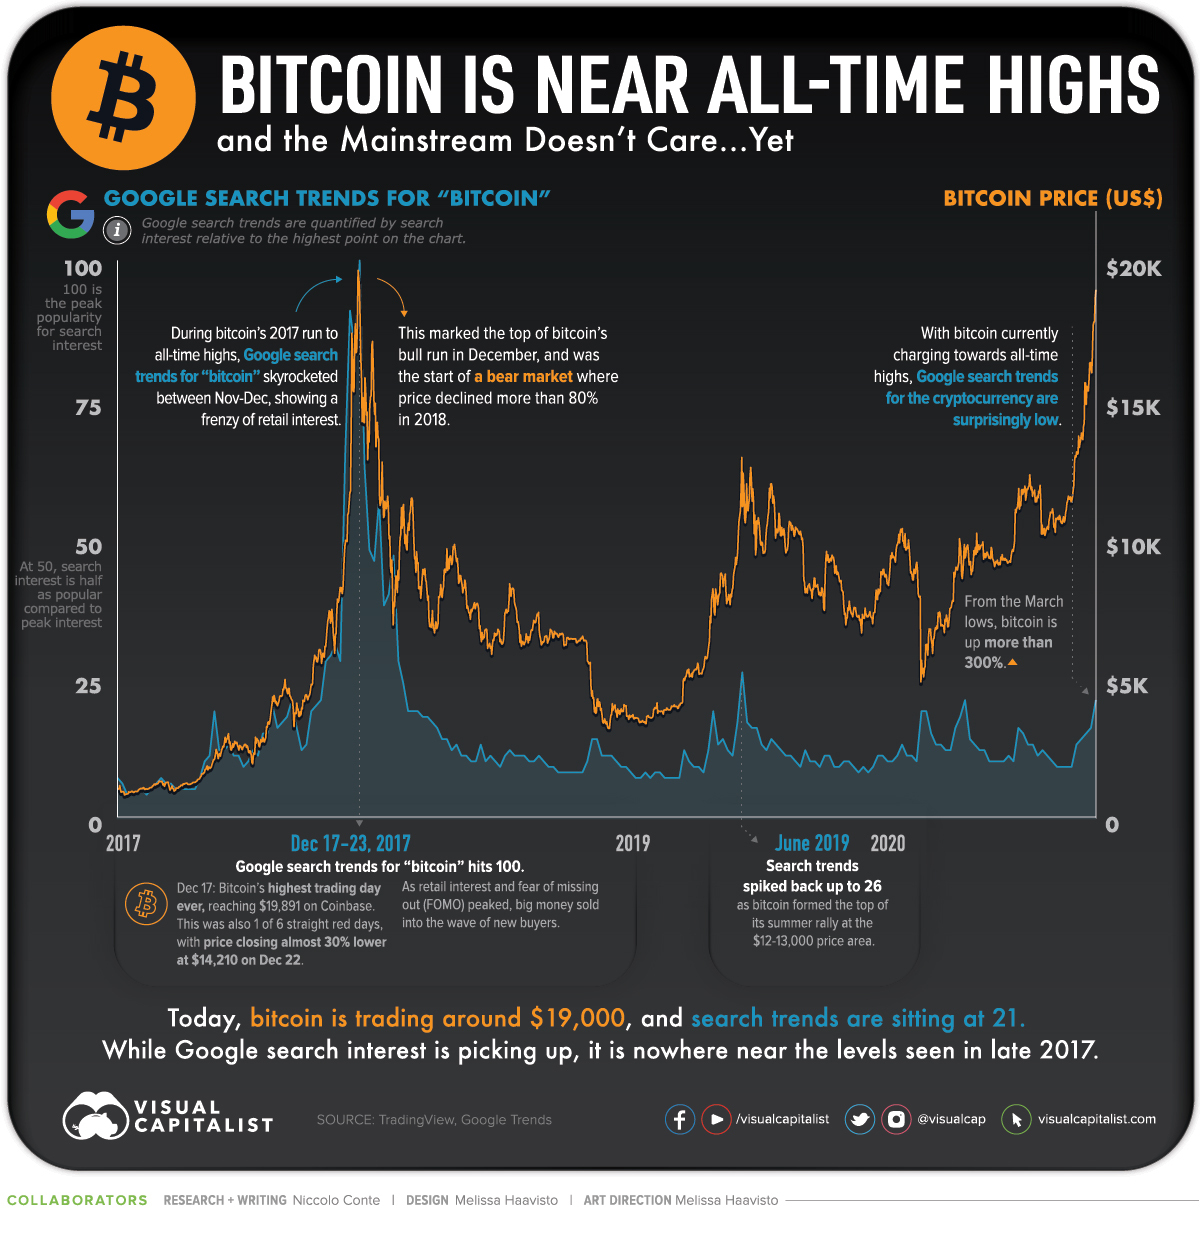 Bitcoin's Price History